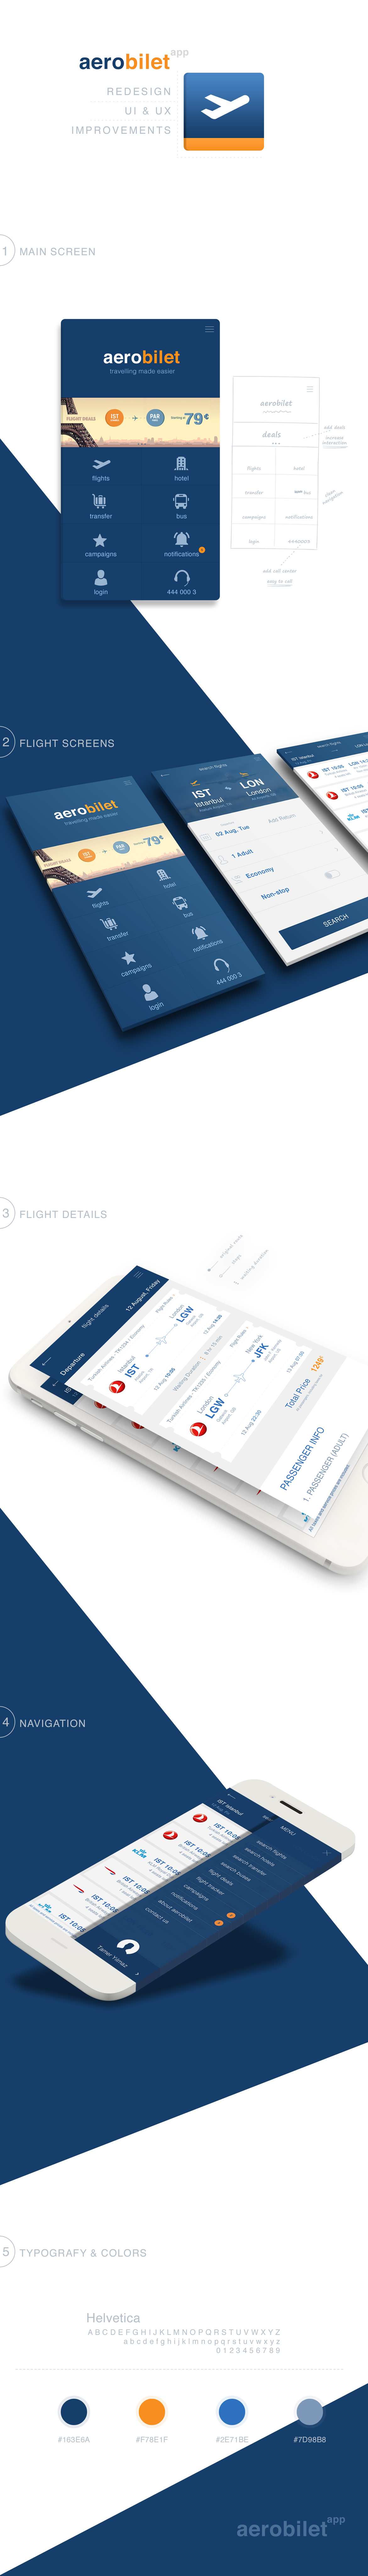 redesign mobile app aerobilet ui ux Travel Flights